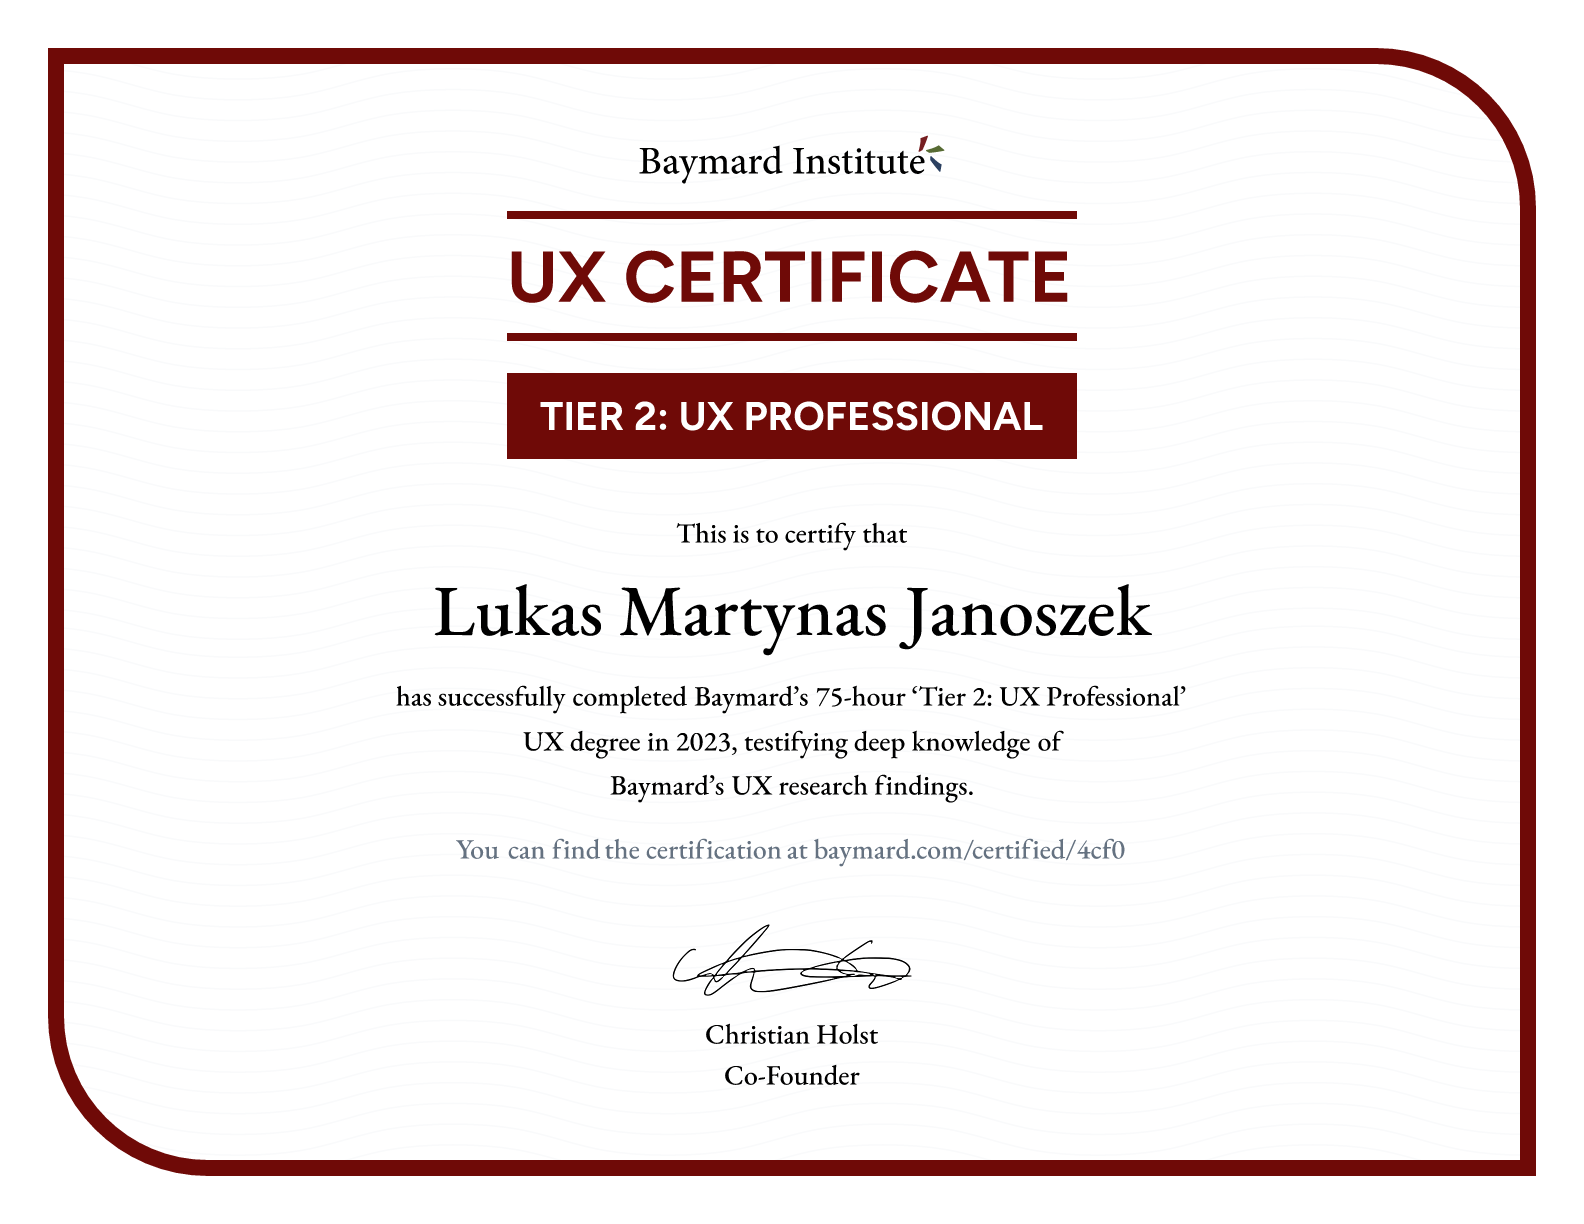 Lukas Martynas Janoszek’s certificate